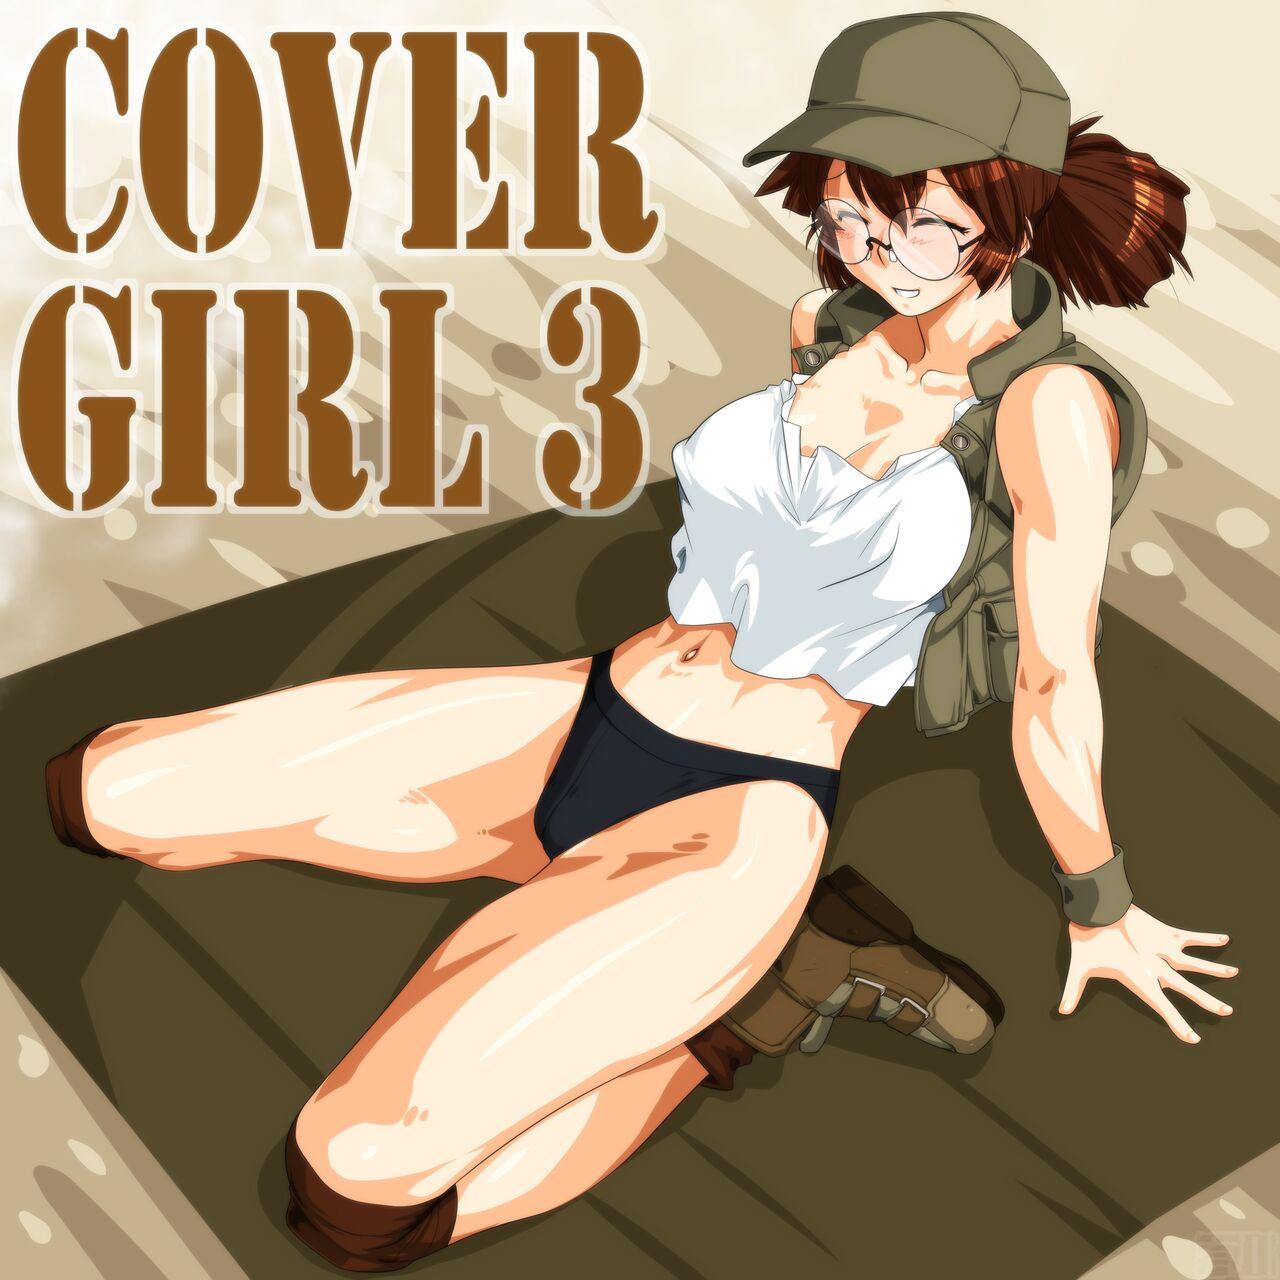 COVER GIRL 3 11